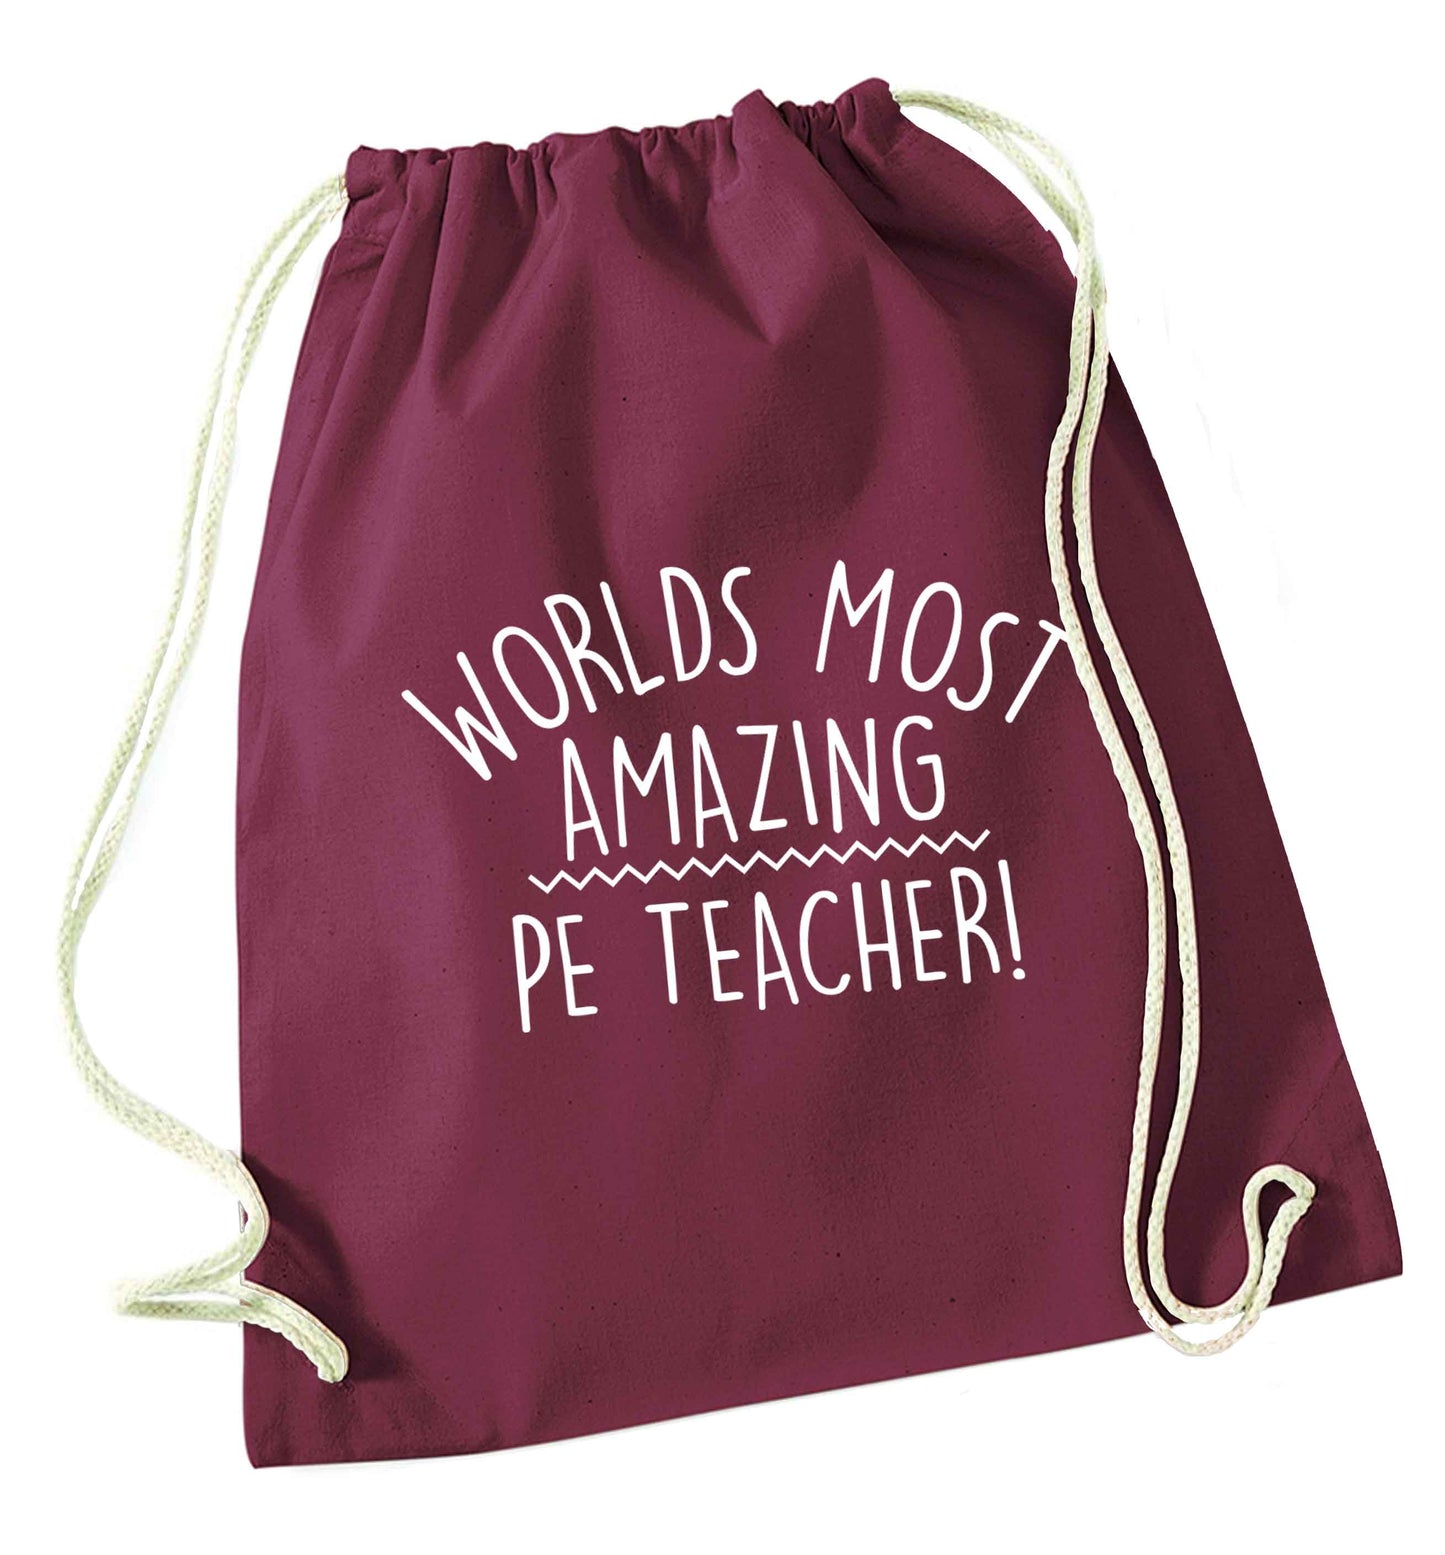 Worlds most amazing PE teacher maroon drawstring bag